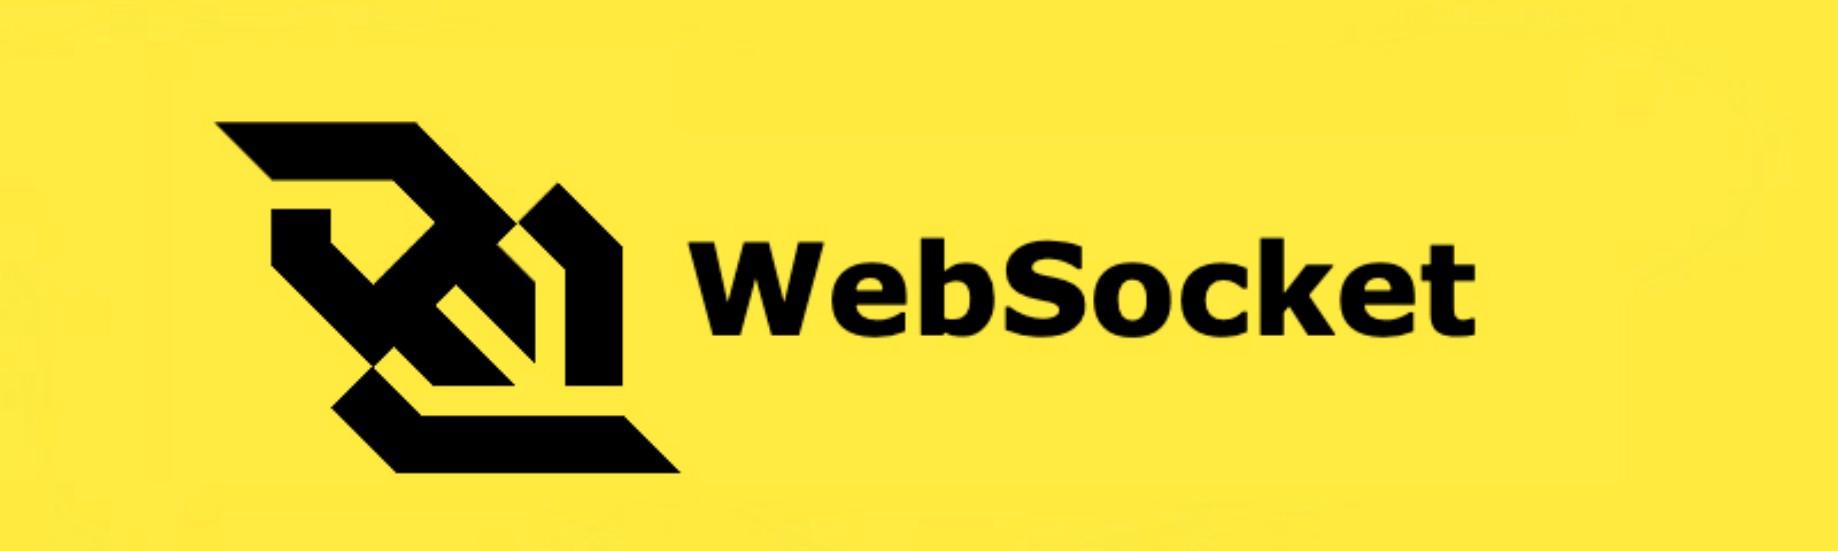 WebSocket Logo - What is WebSocket? - Commencis - Medium